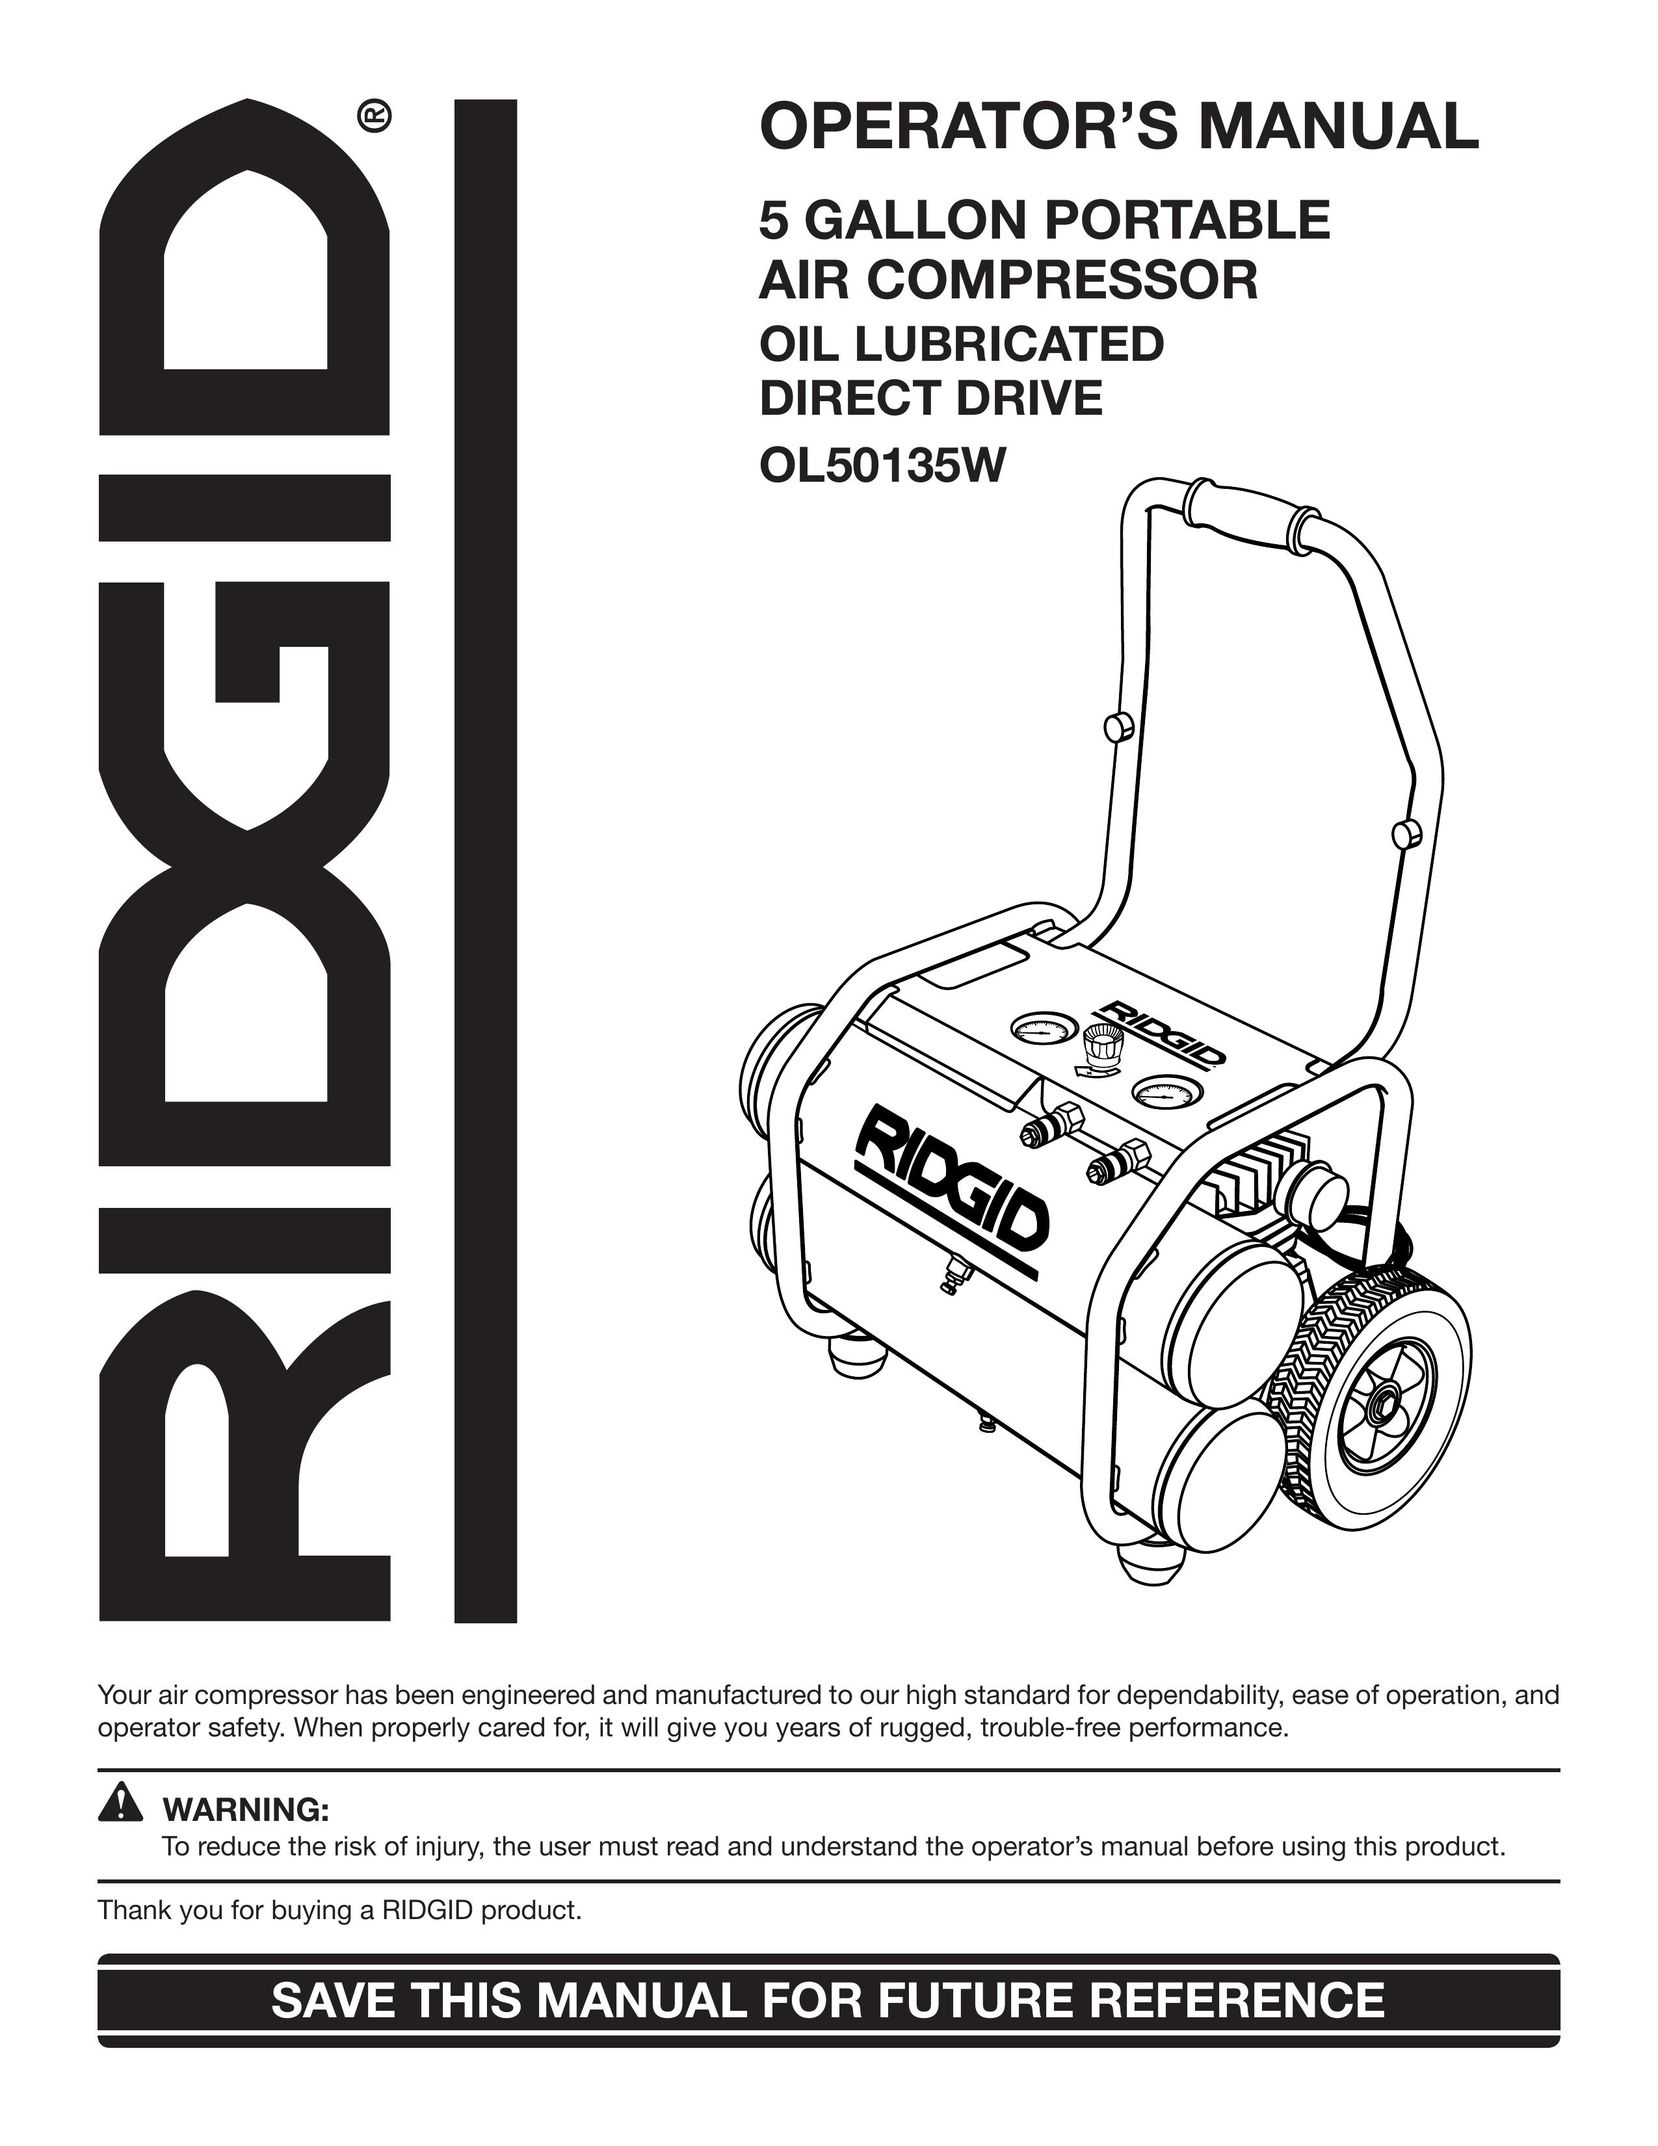 RIDGID OL50135W Air Compressor User Manual